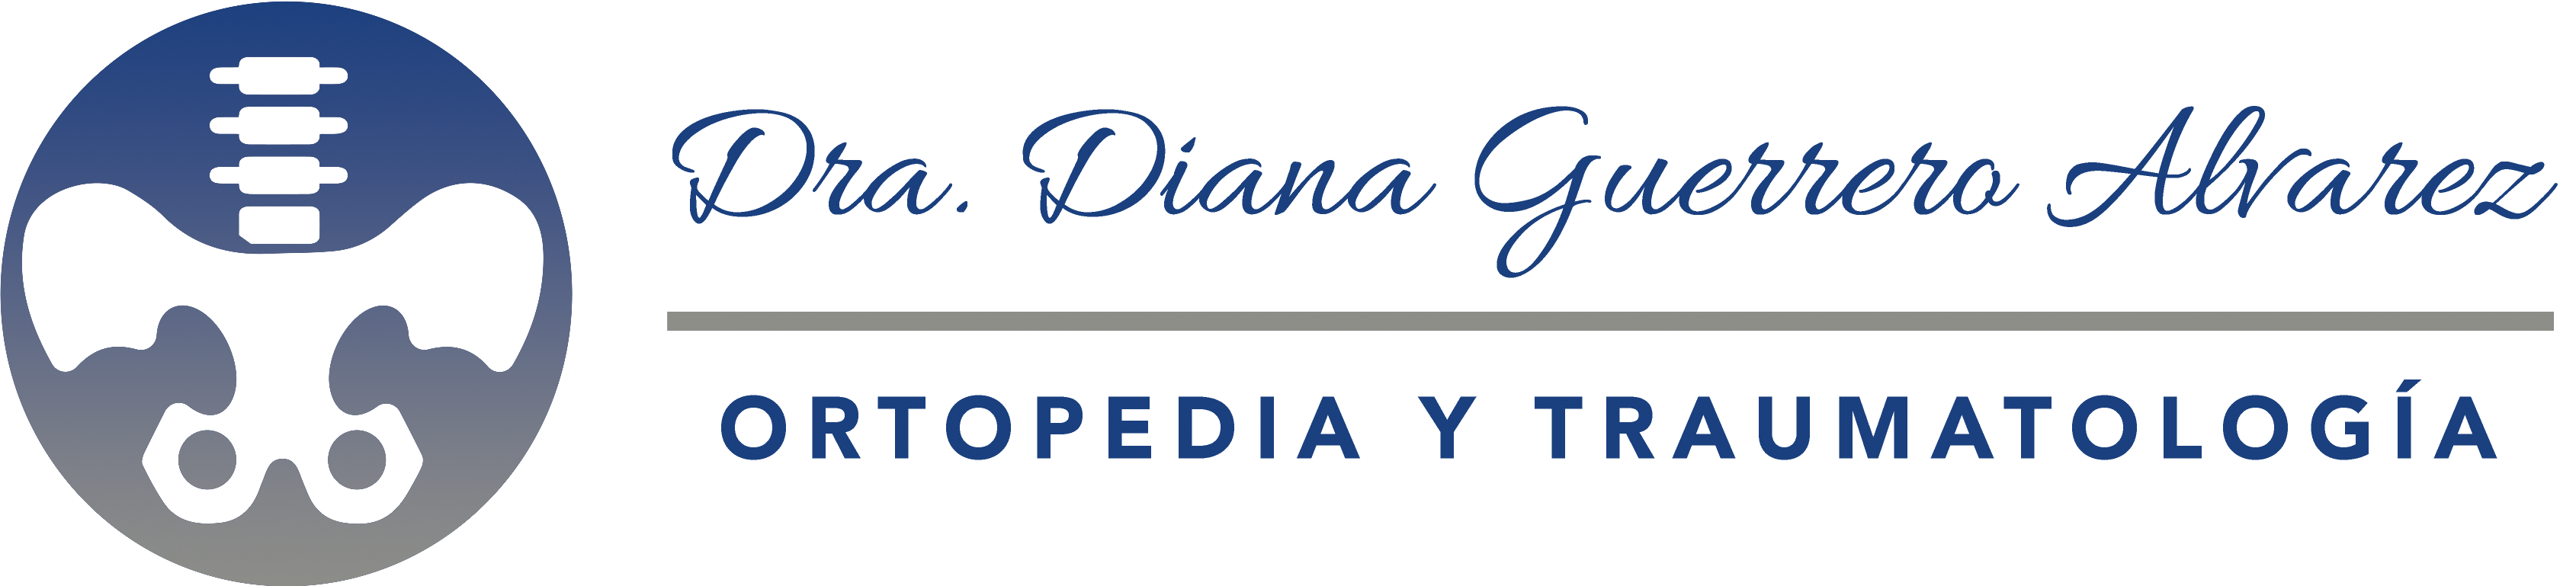 Dra. Diana Guerrero Alvarez